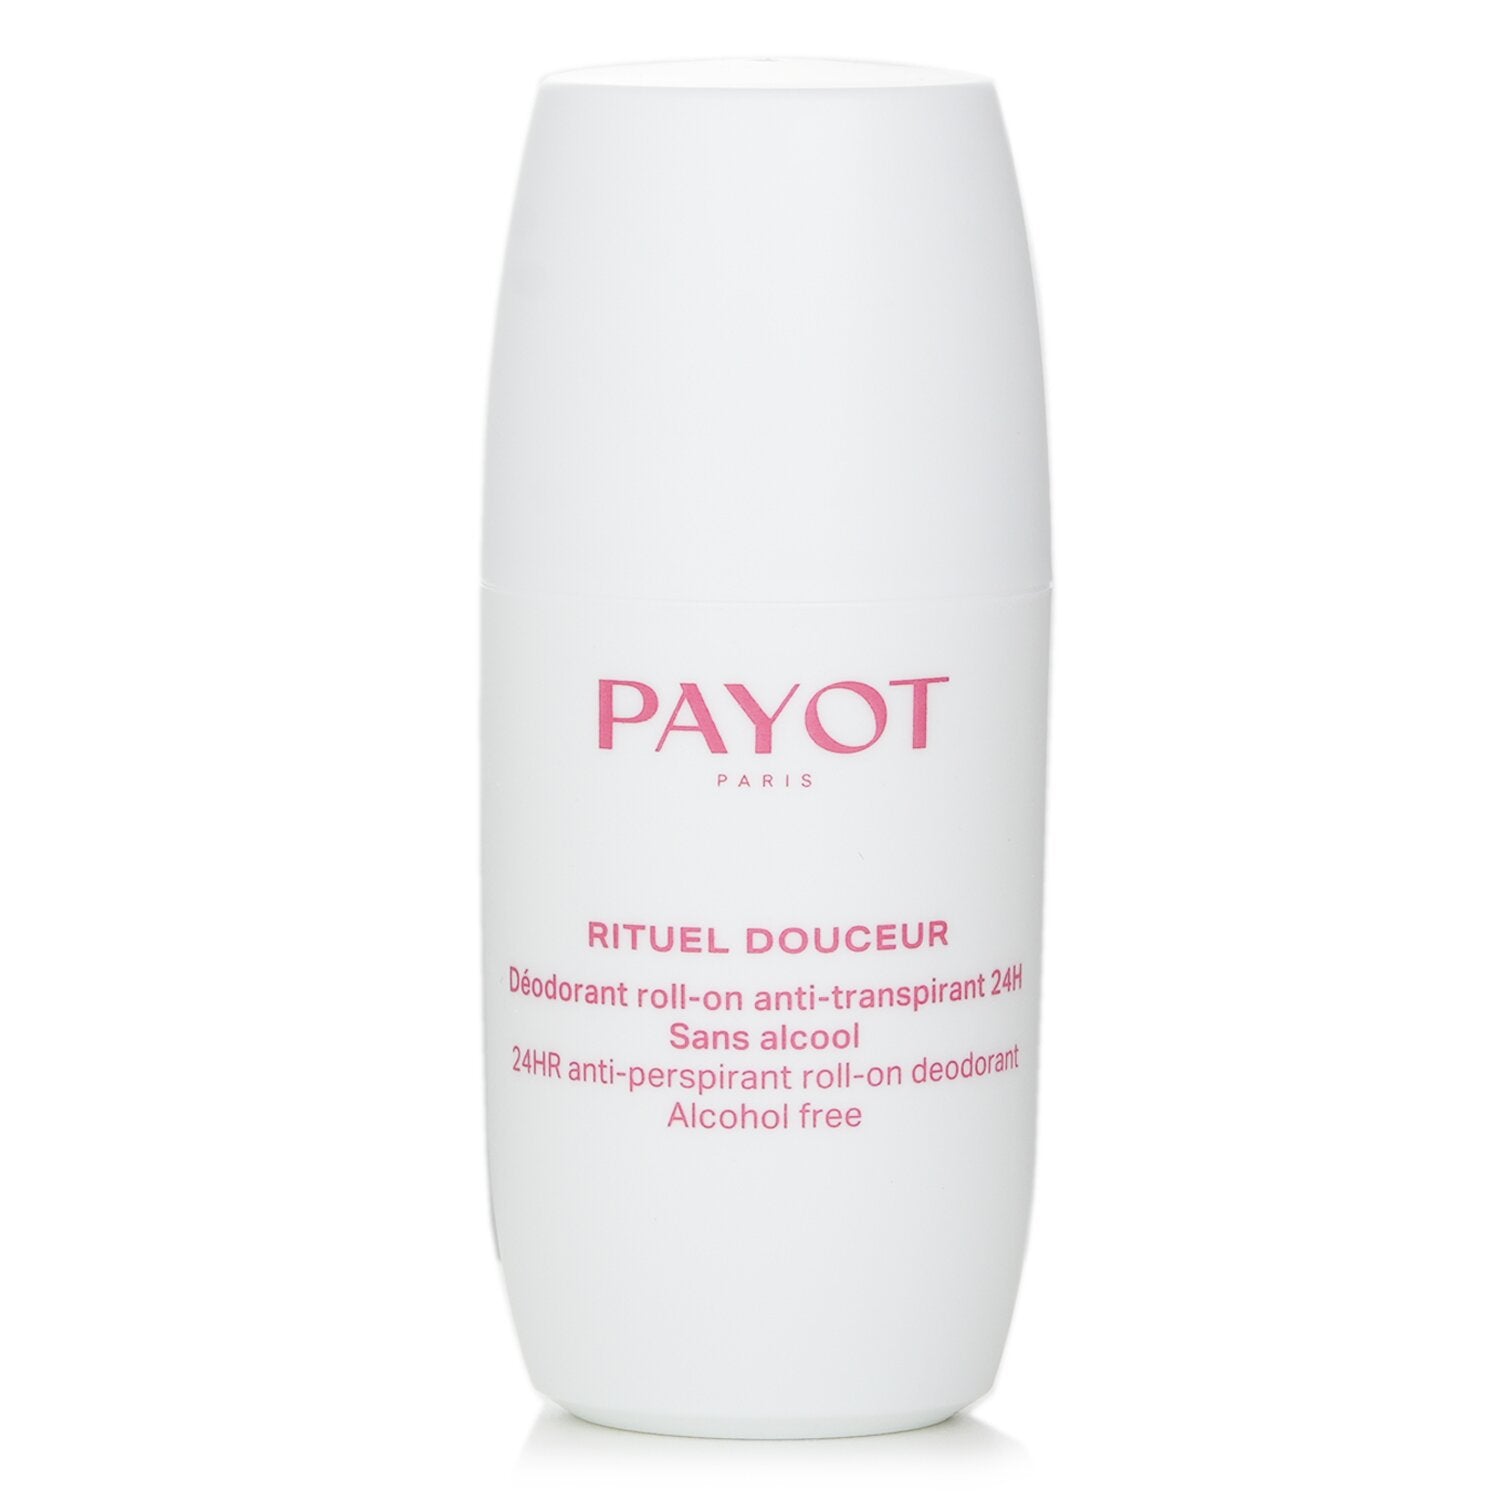 Payot Deodorant 24h Anti-Perspirant Roll-On Deodorant 75ml/2.5oz Fresh USA